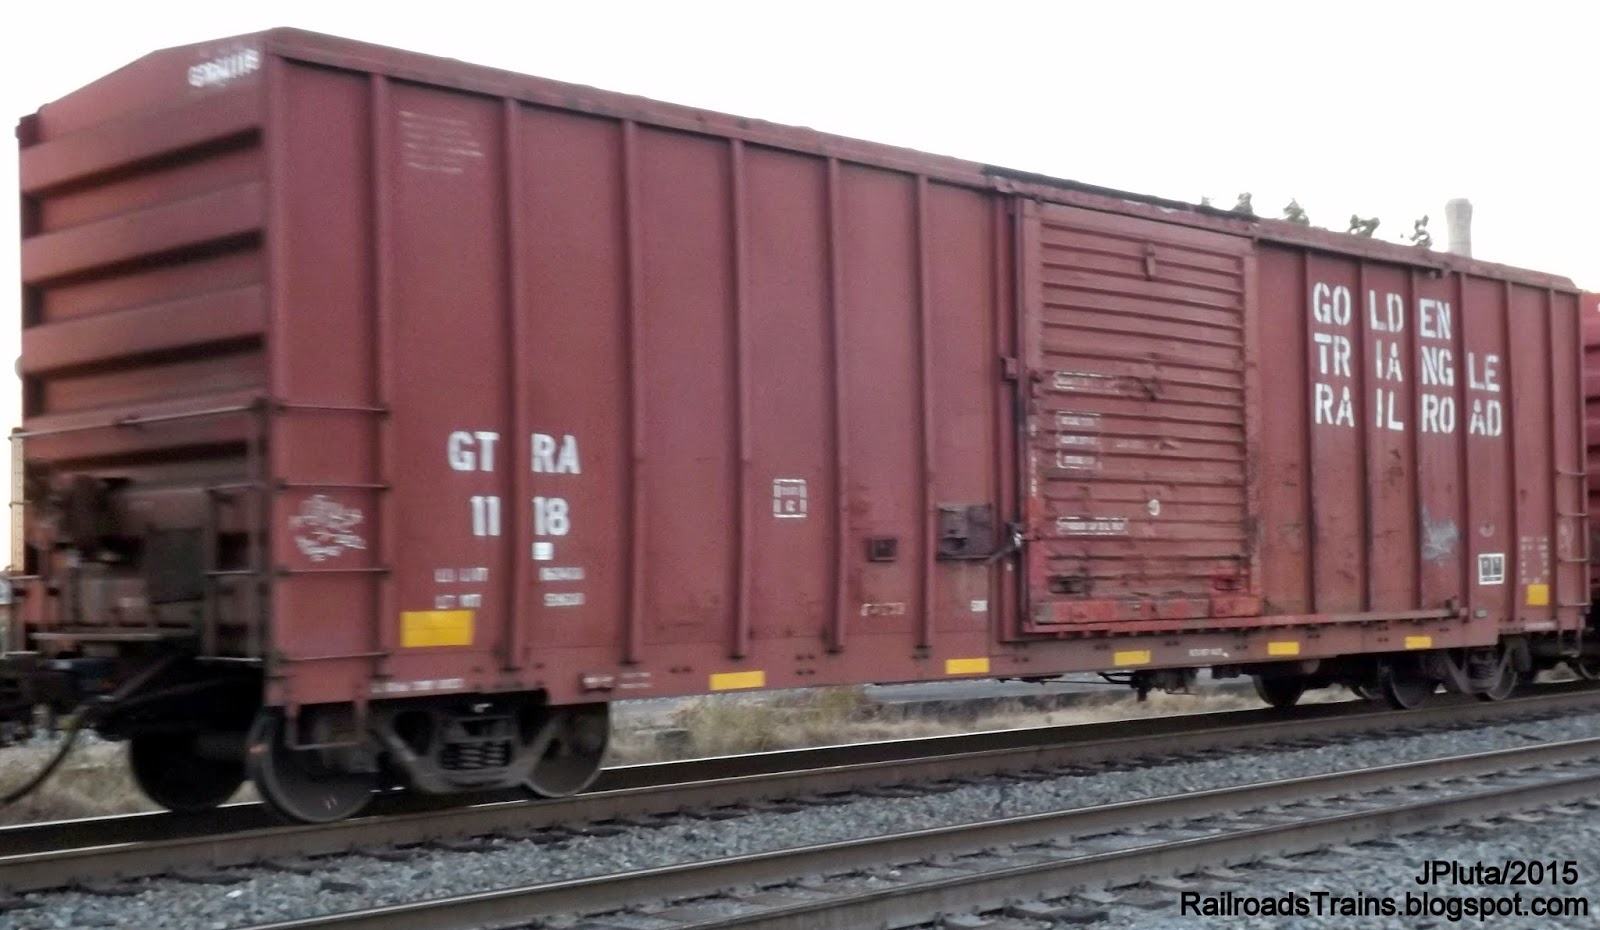 GTRA+1118+Boxcar+Single+Door+Rail+Car+Golden+Triangle+Railroad+Class+3+Mississippi+GTRA+Golden+Triangle+Railway+MS.+Freight+Train+Railcar.JPG